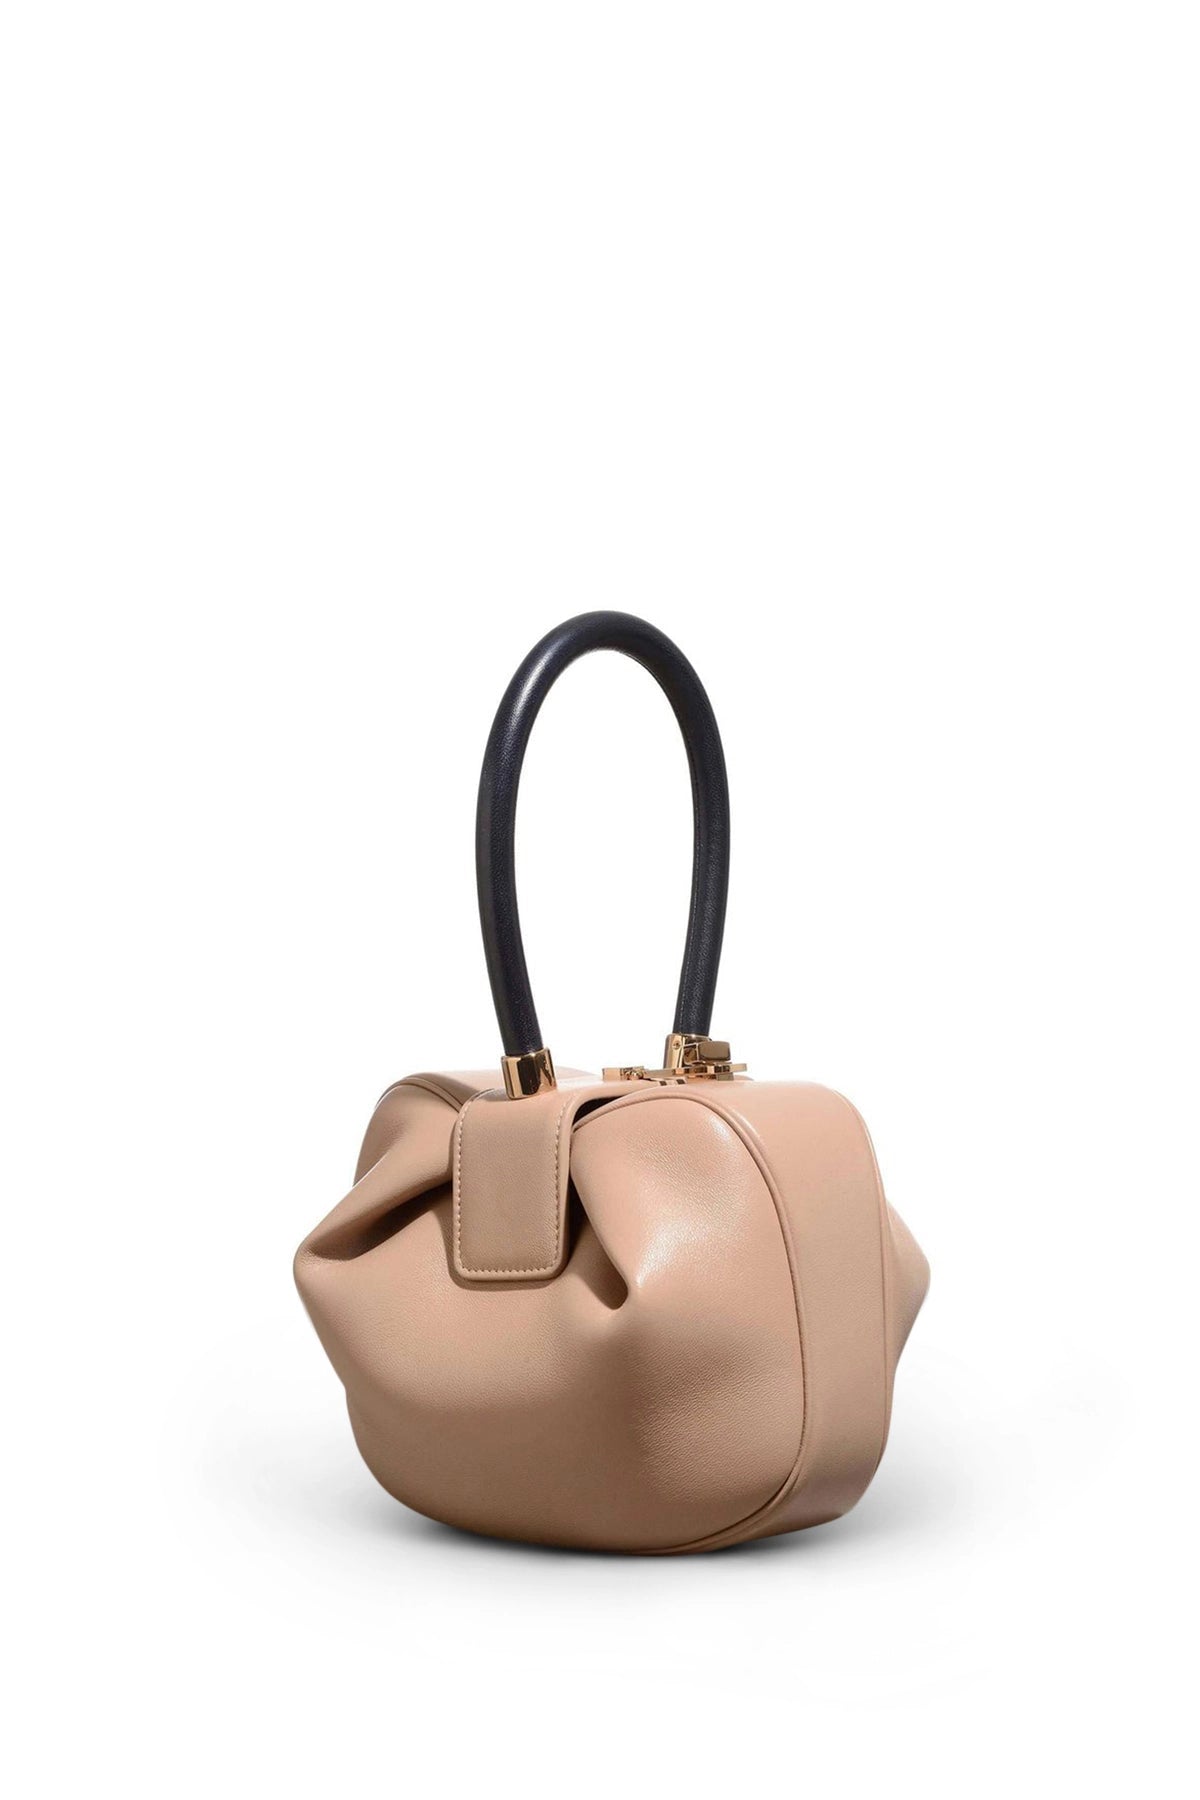 Gabriela Hearst, Bags, Gabriela Hearst Demi Leather Handbag